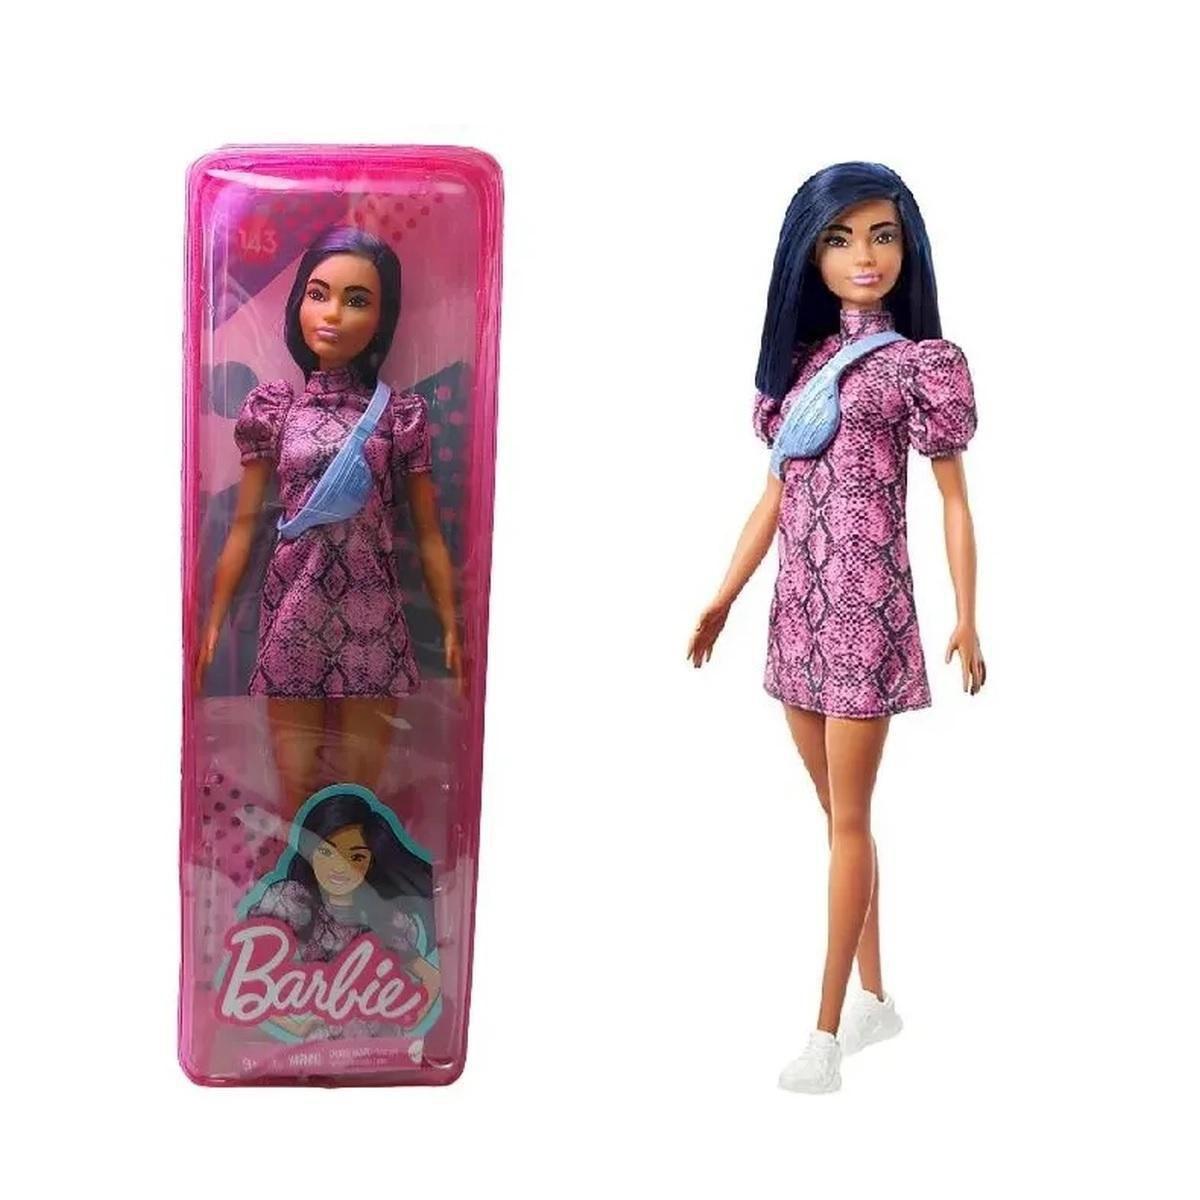 Boneca Barbie Fashionista Doll Look Modelo 143 Mattel Fbr37 - Boneca Barbie  - Magazine Luiza